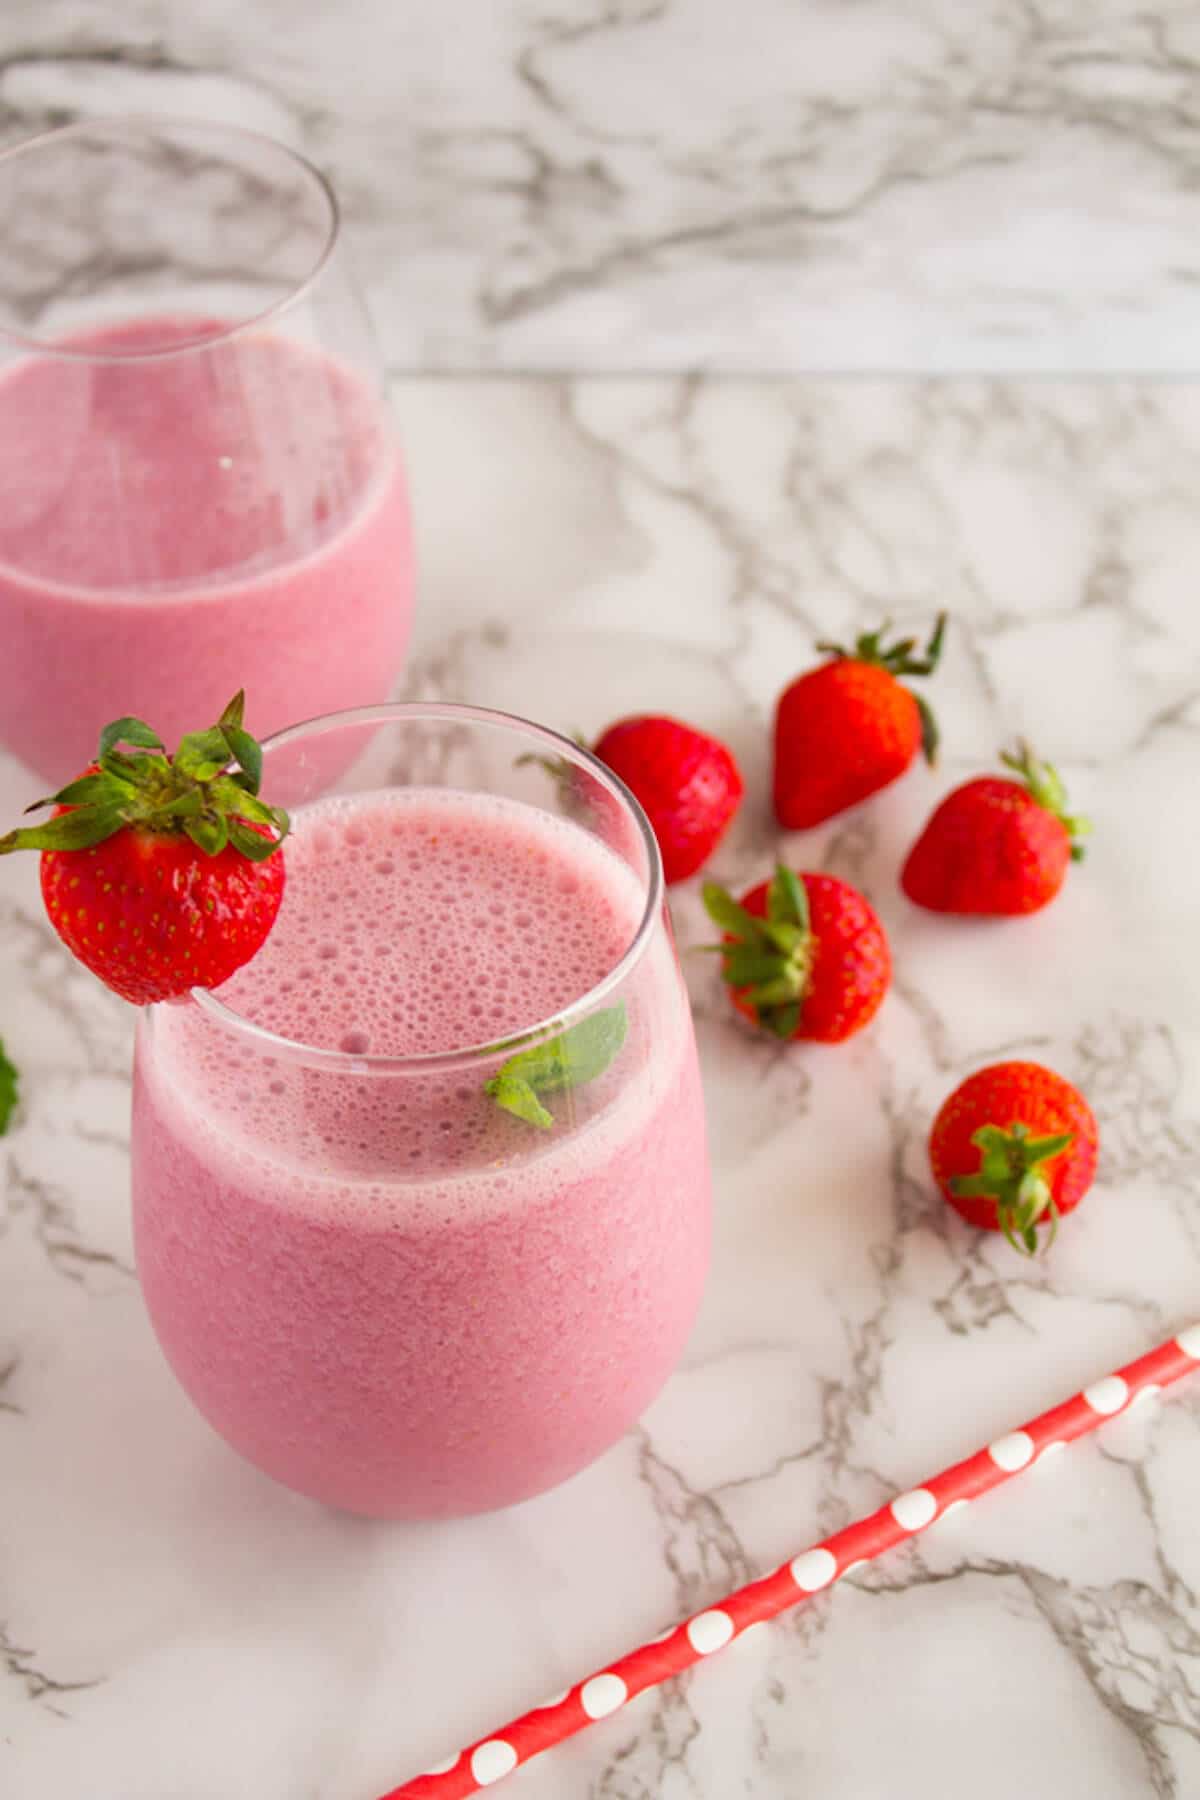 Strawberry smoothie - mainair